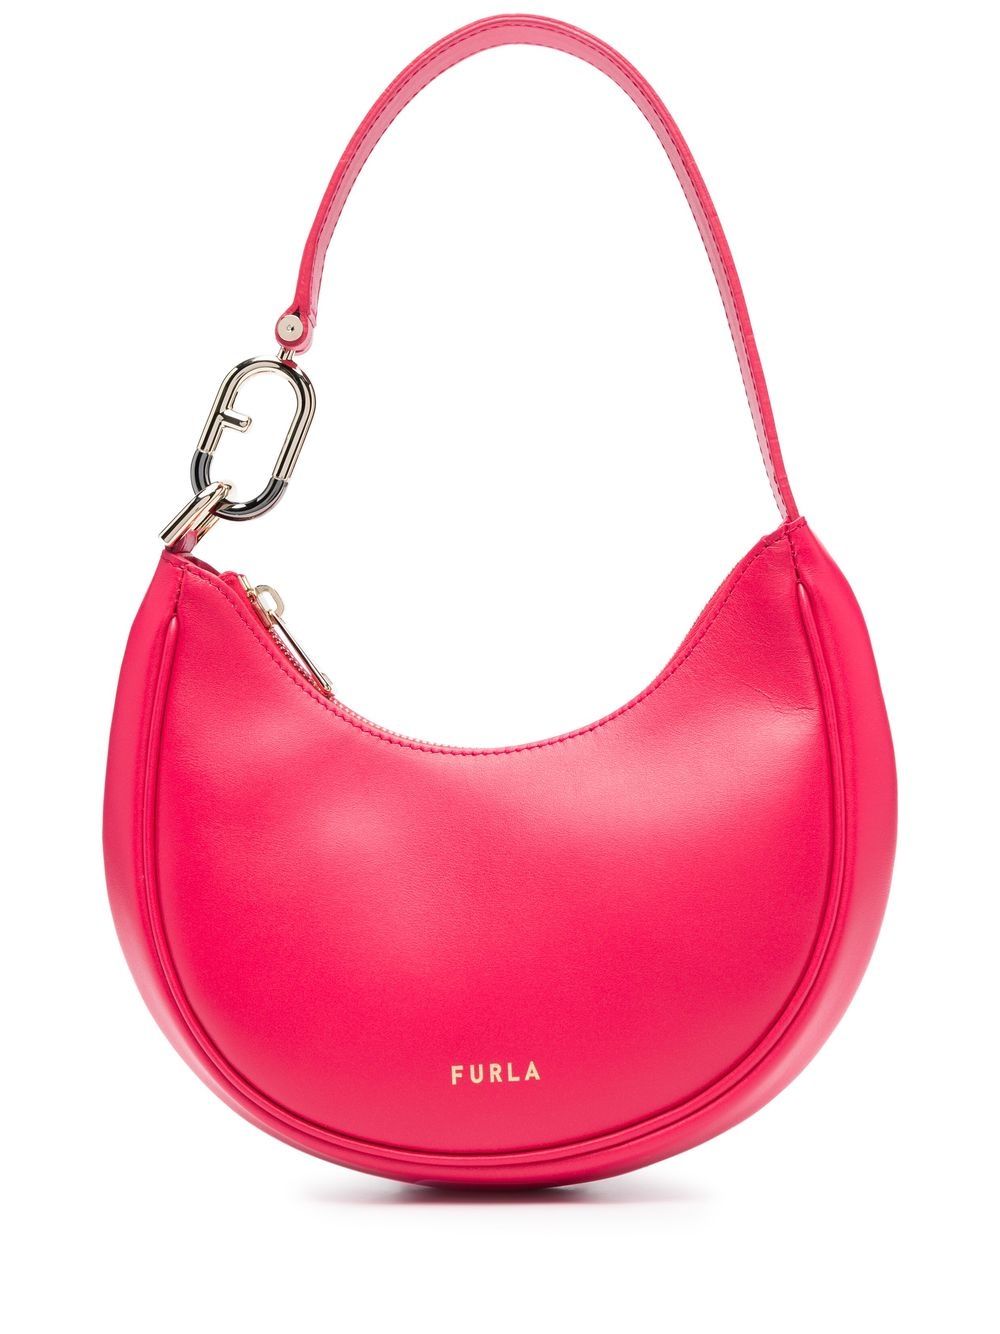 Furla Primavera leather shoulder bag - Pink von Furla